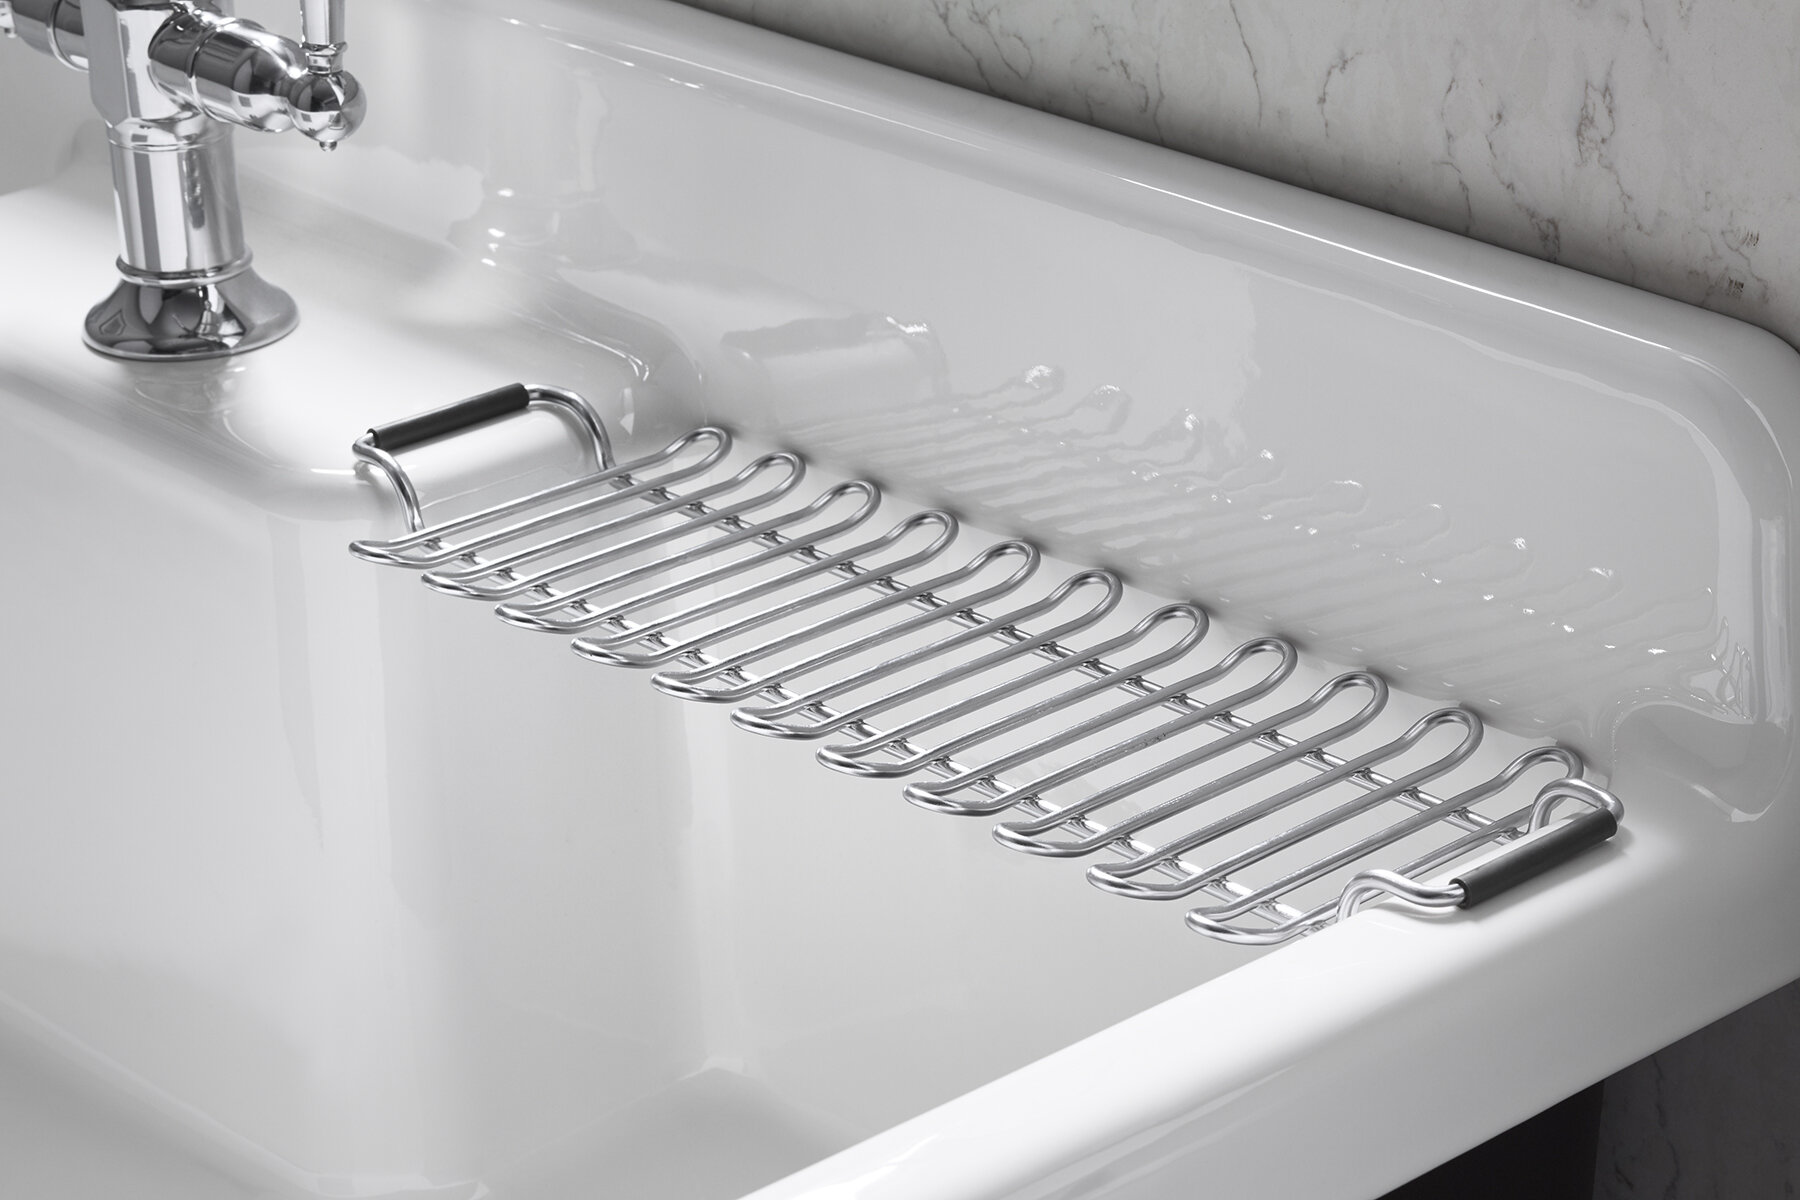 Kohler Sink Utility Rack + Reviews